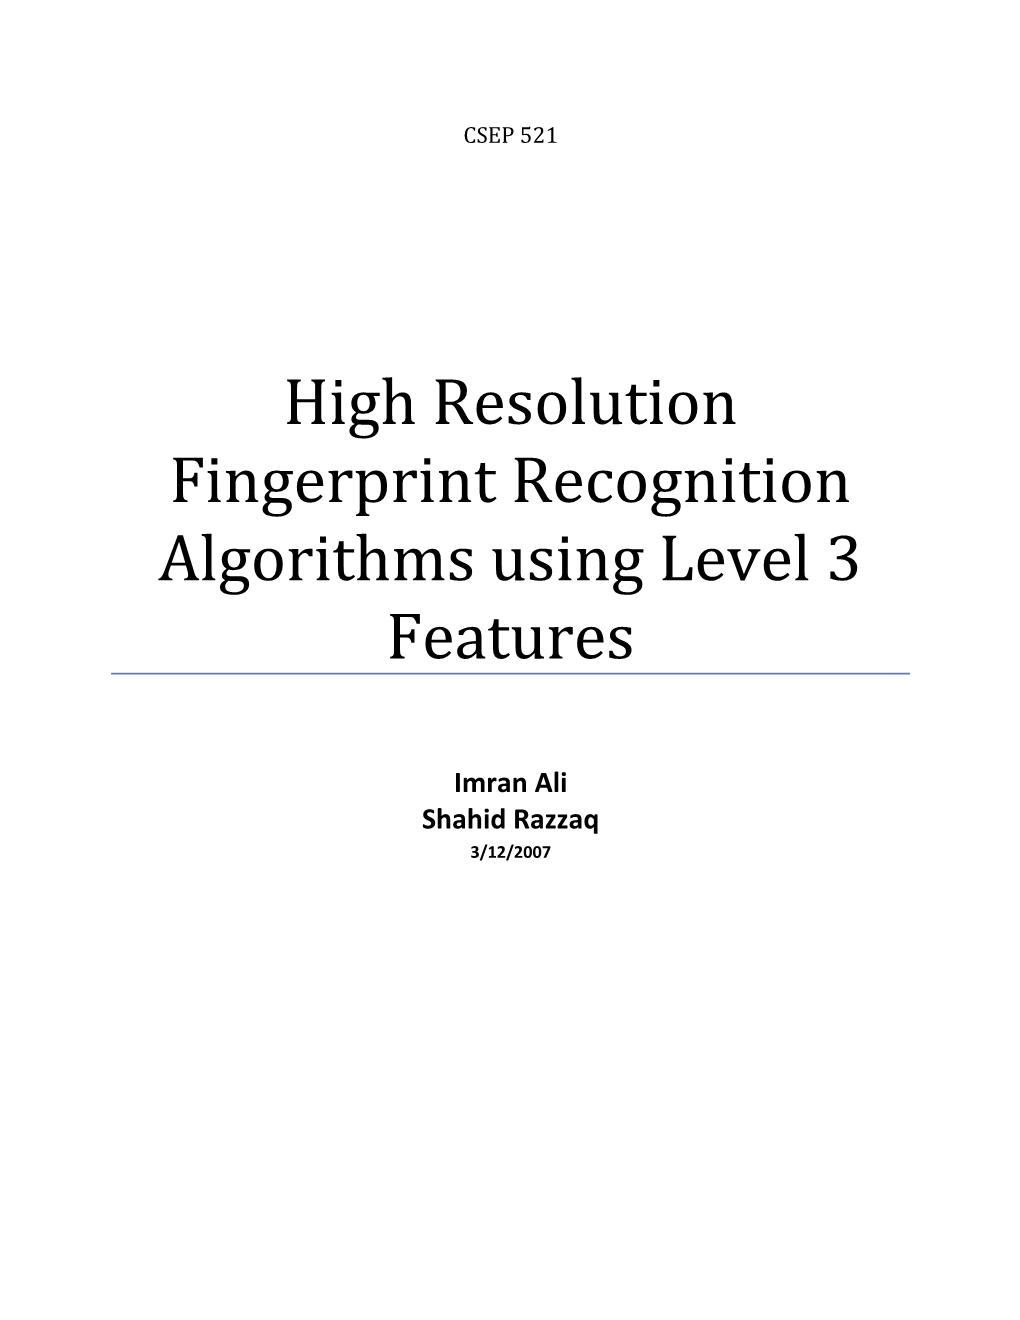 High Resolution Fingerprint Recognition Algorithms Using Level 3 Features